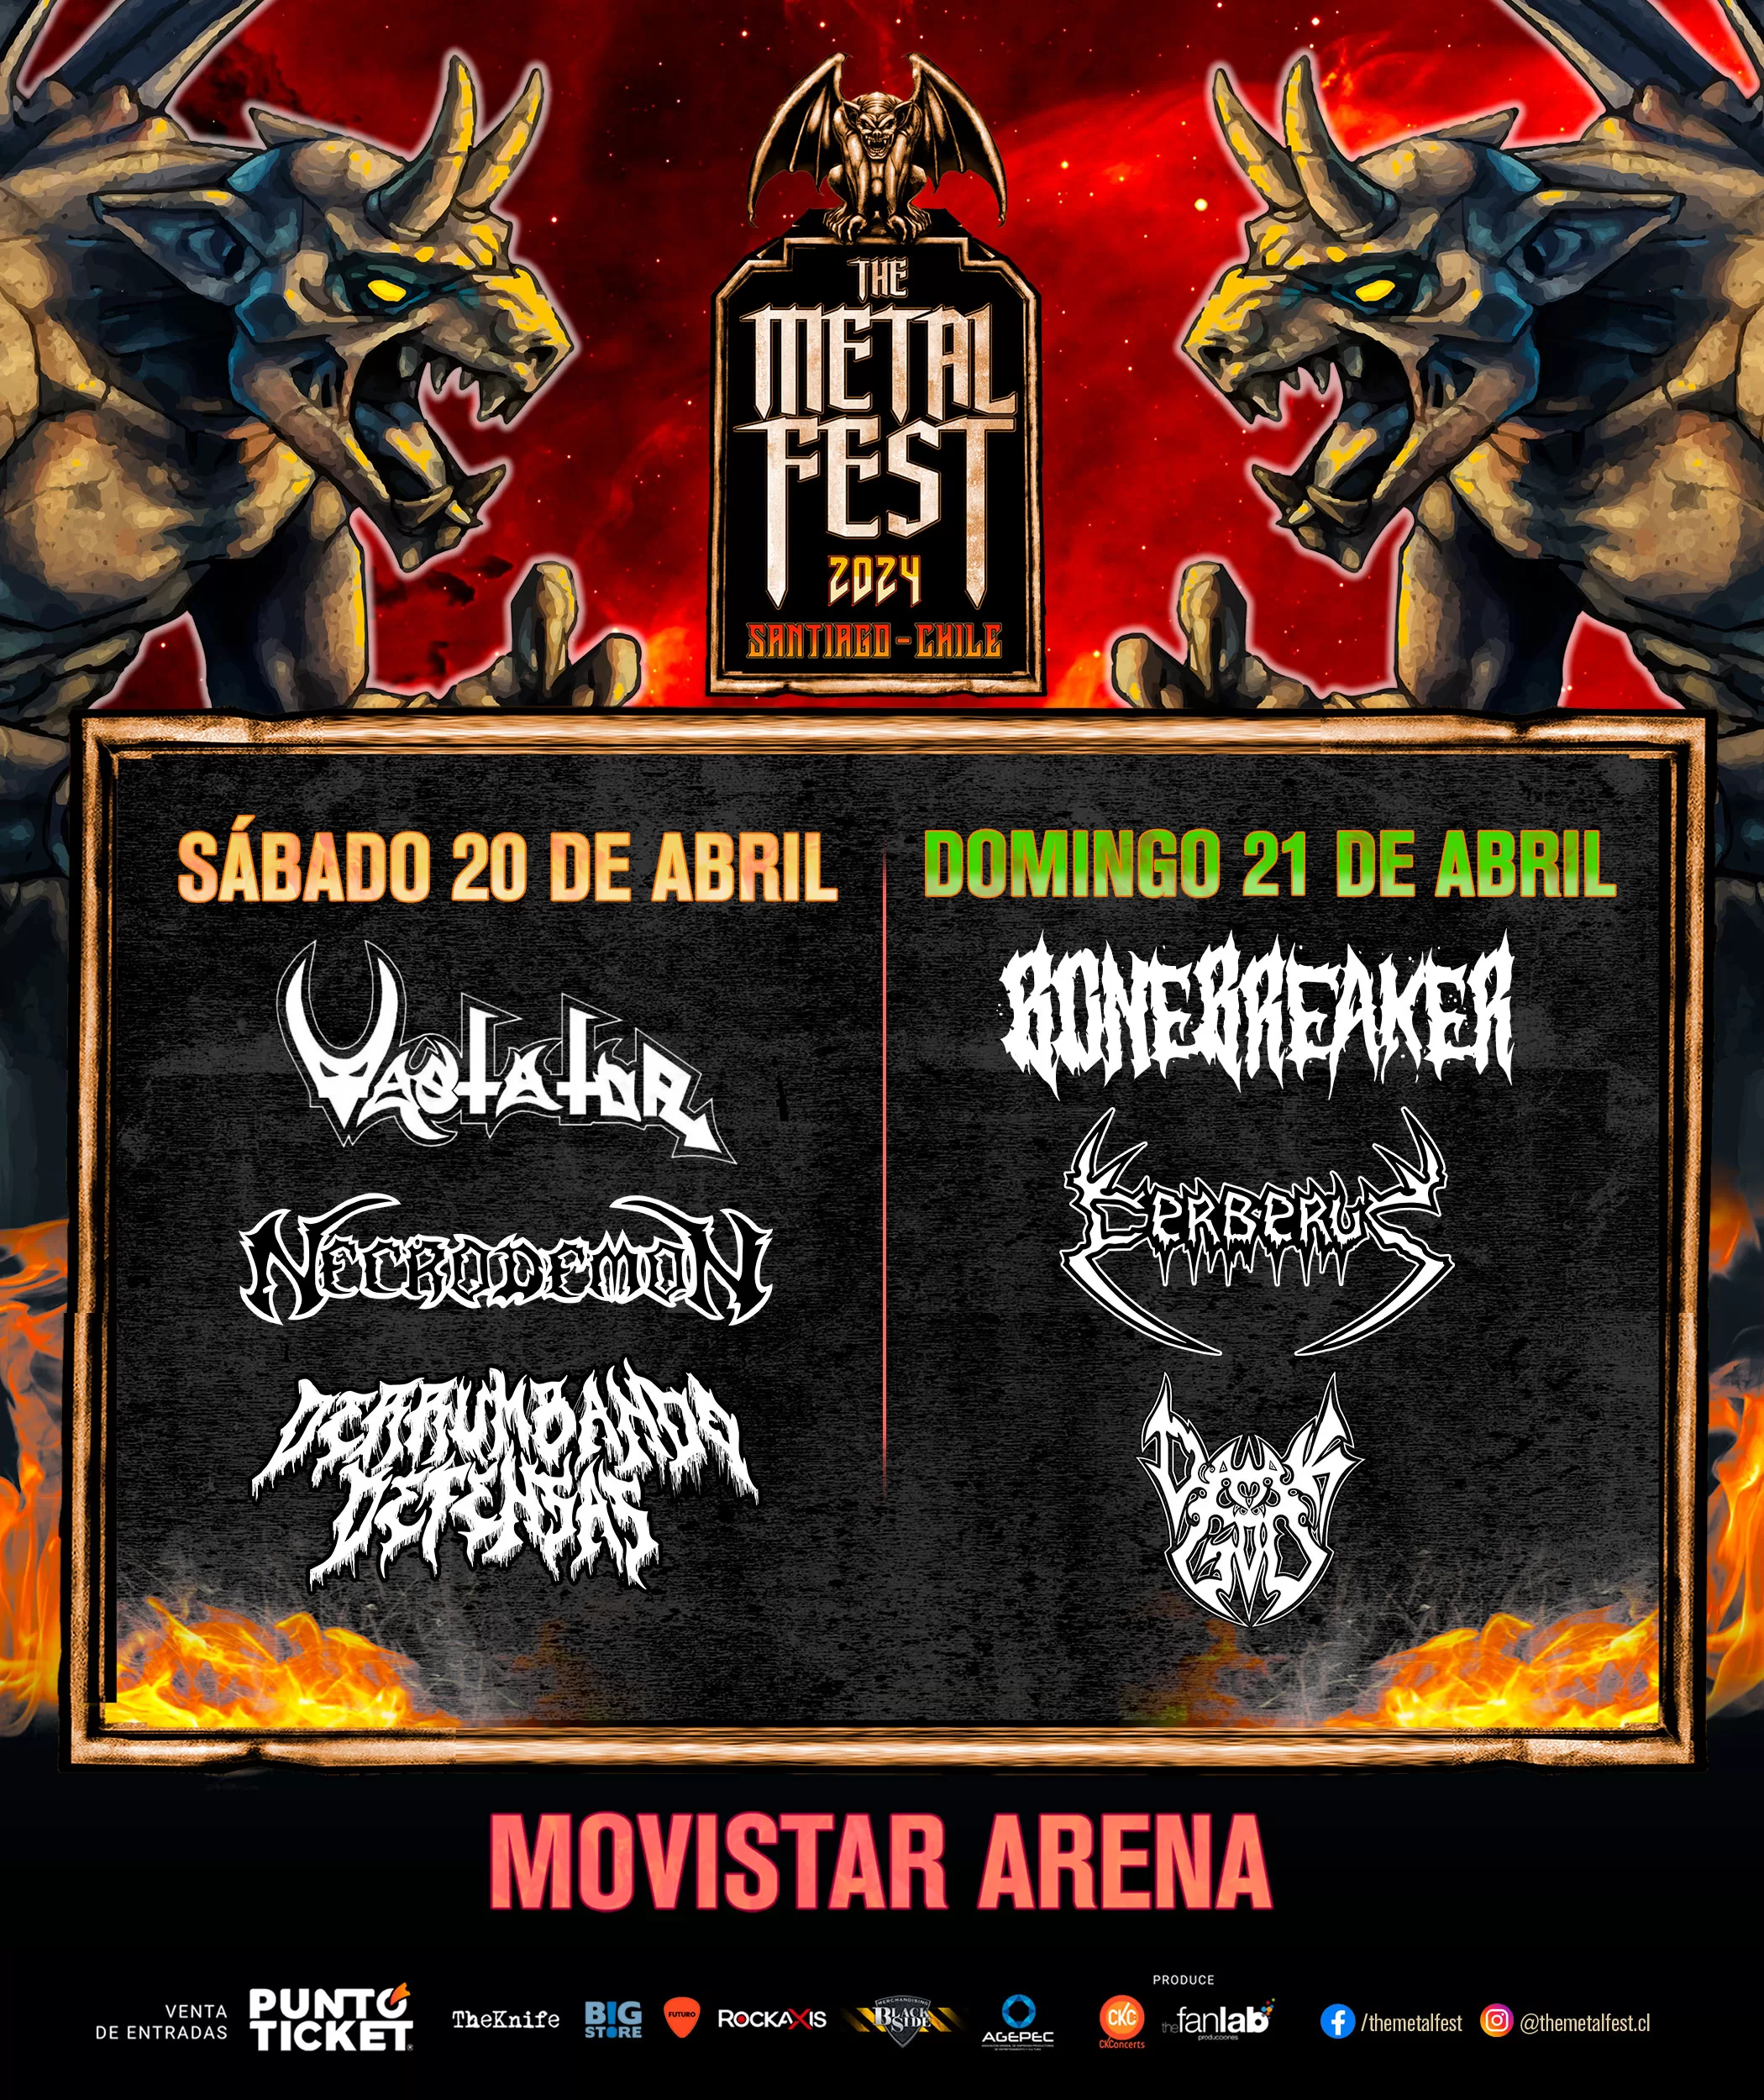 Metalfest_square_2dias_nuevasbandasnacionales